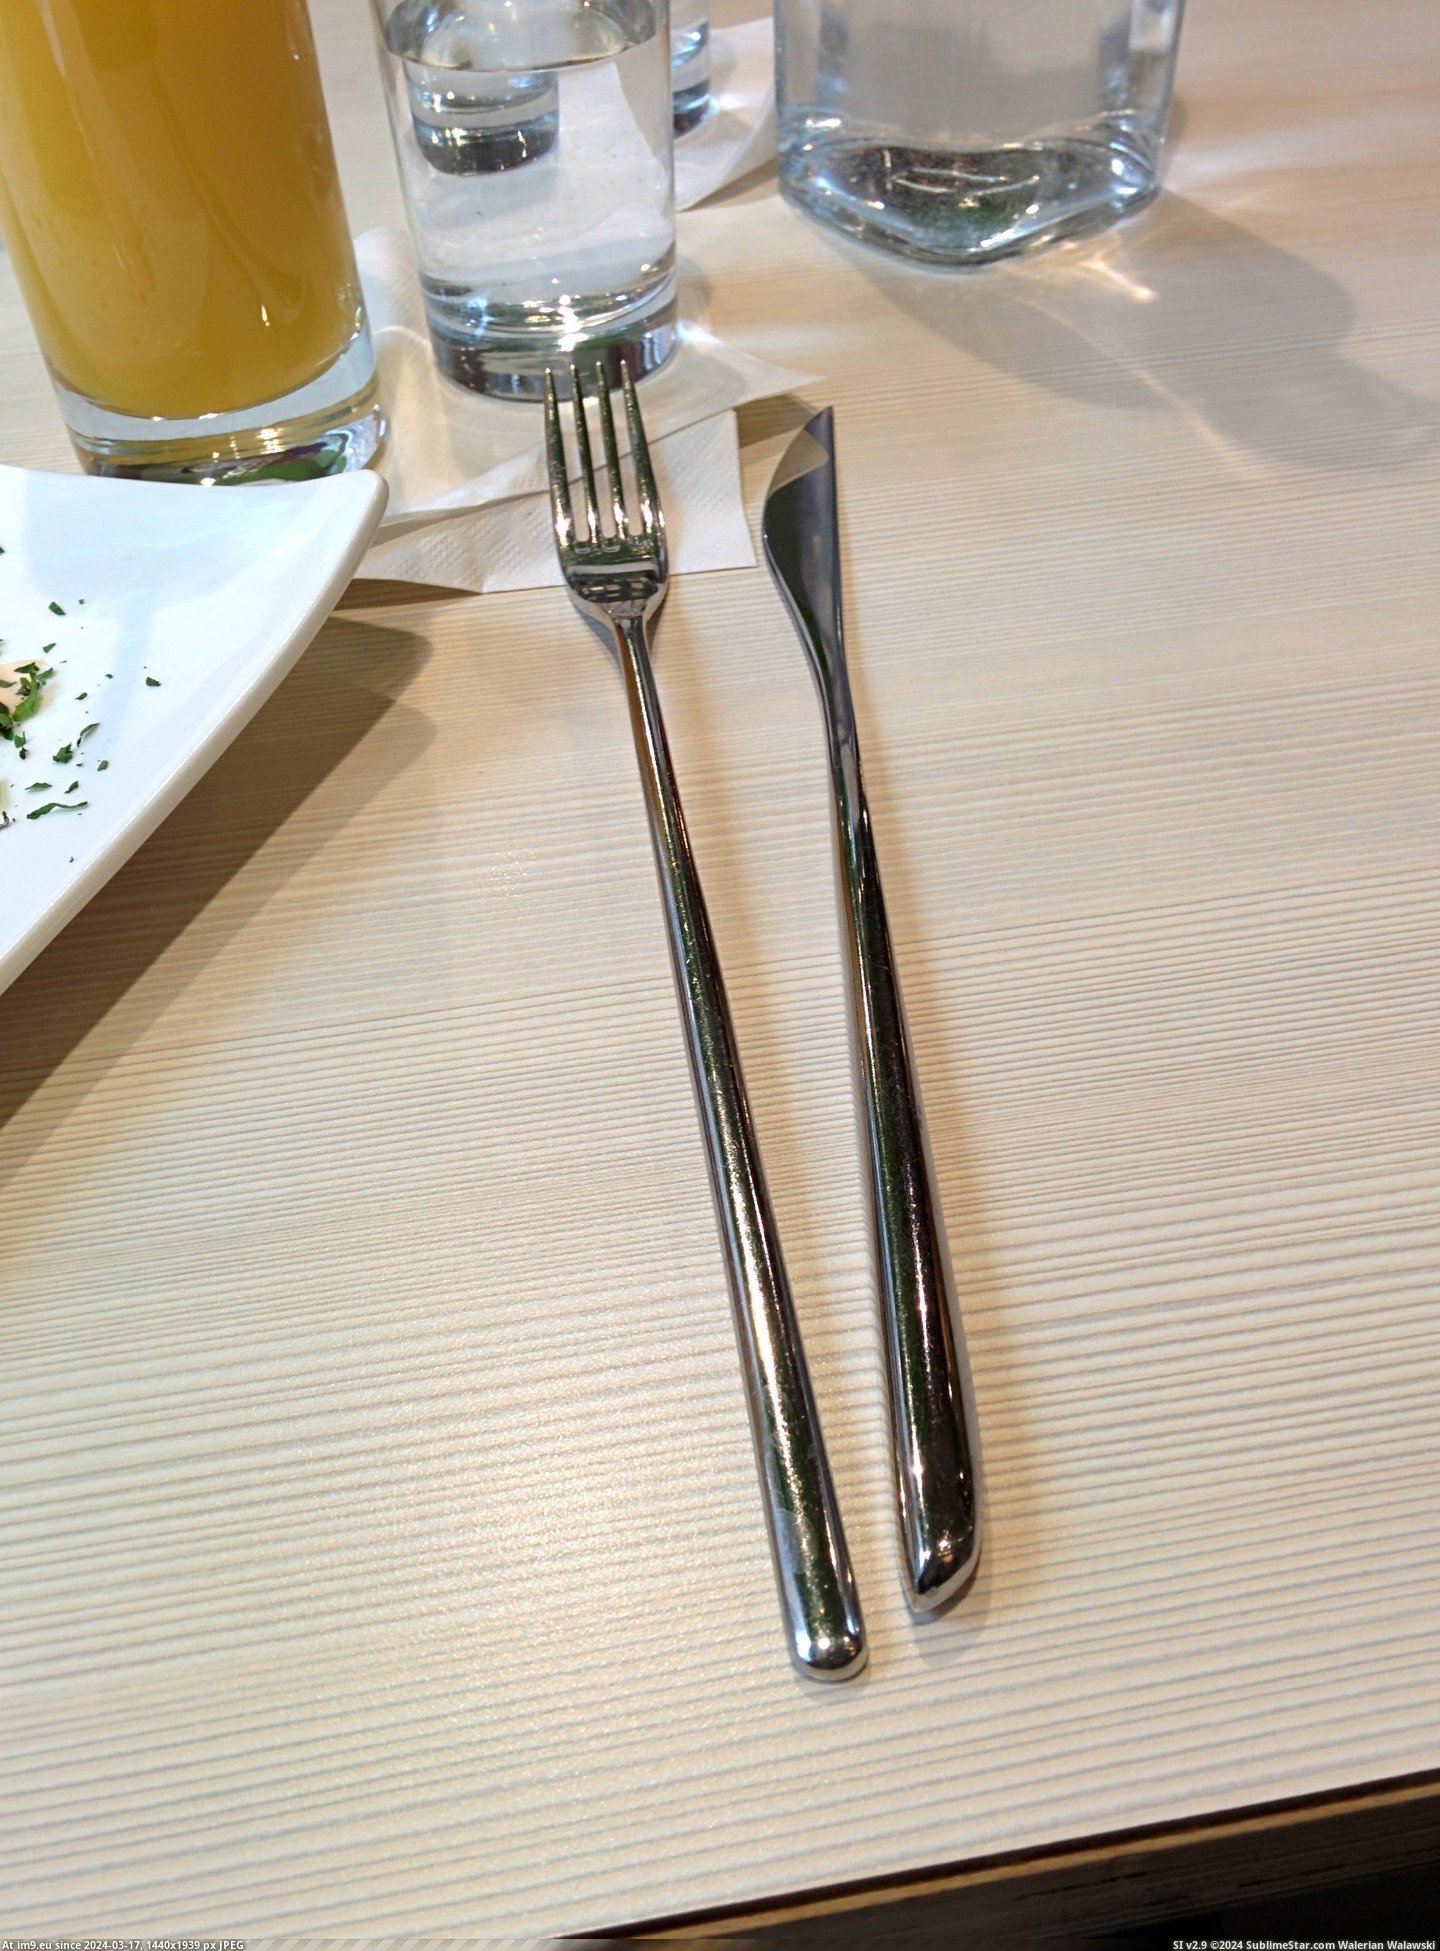 #Restaurant #Knife #Fork #Awkward [Mildlyinteresting] The fork and knife at this restaurant are very awkward Pic. (Obraz z album My r/MILDLYINTERESTING favs))